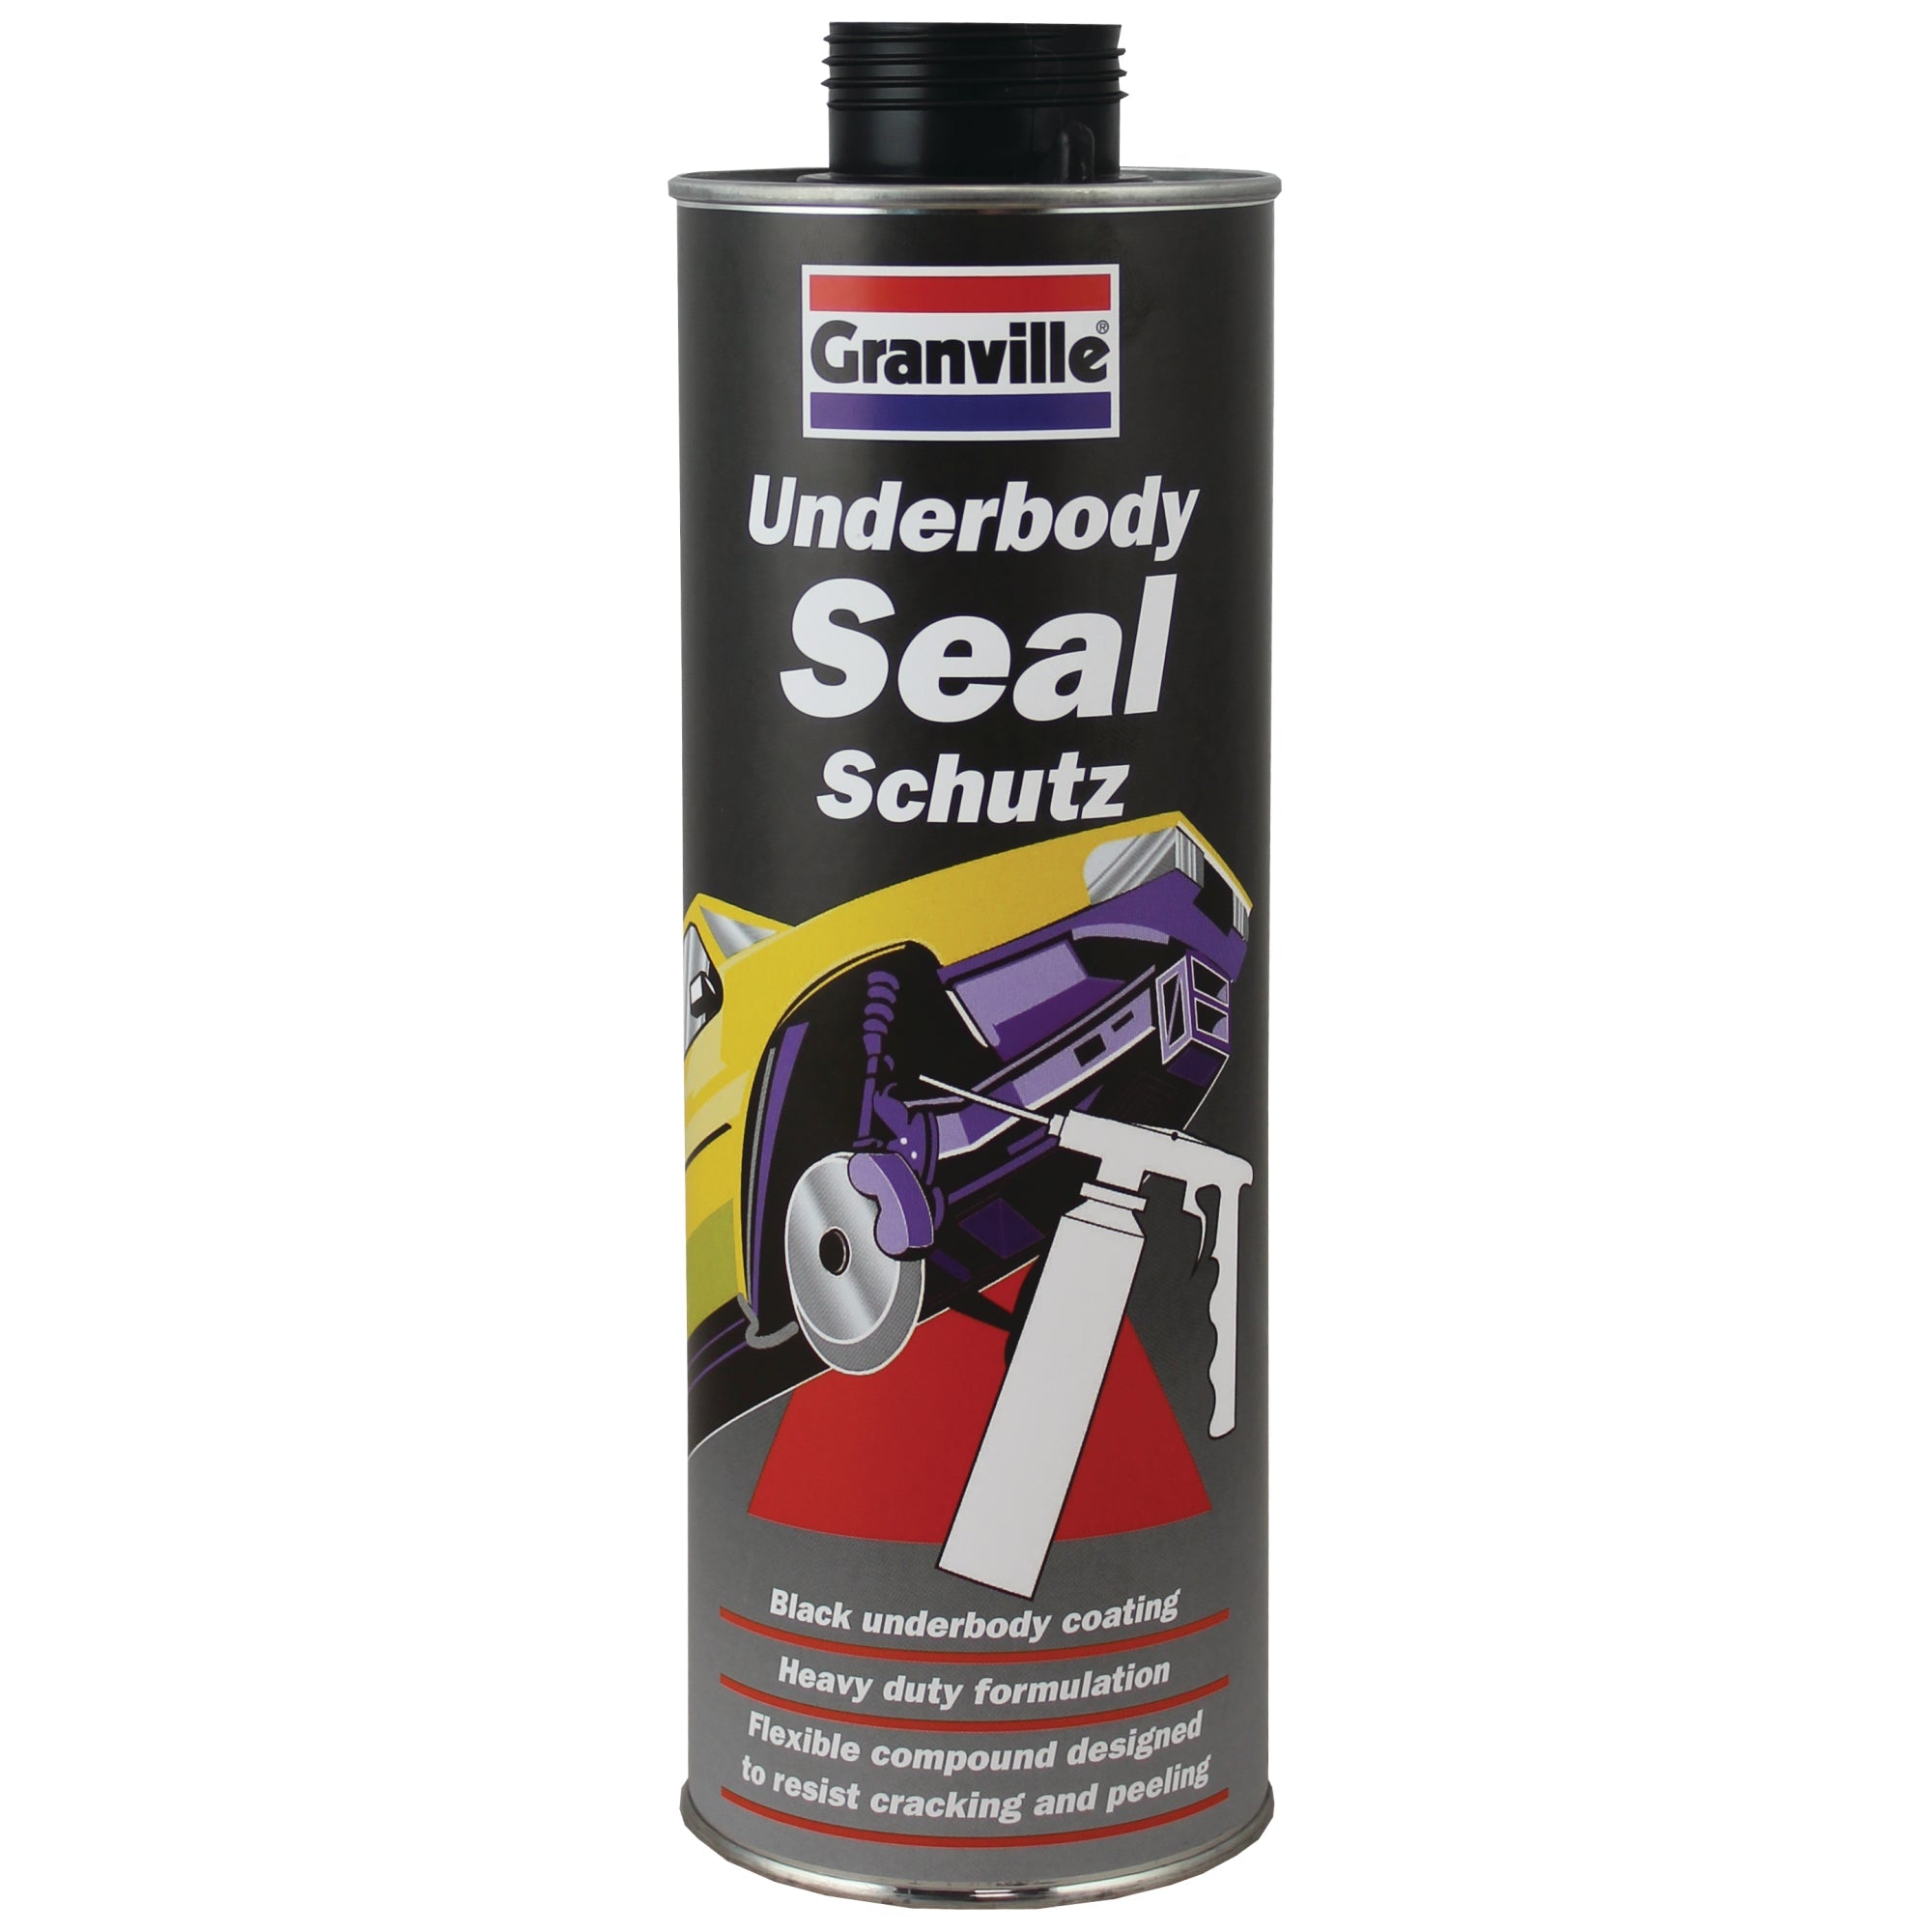 Granville Underbody Seal Schutz 1 Litre